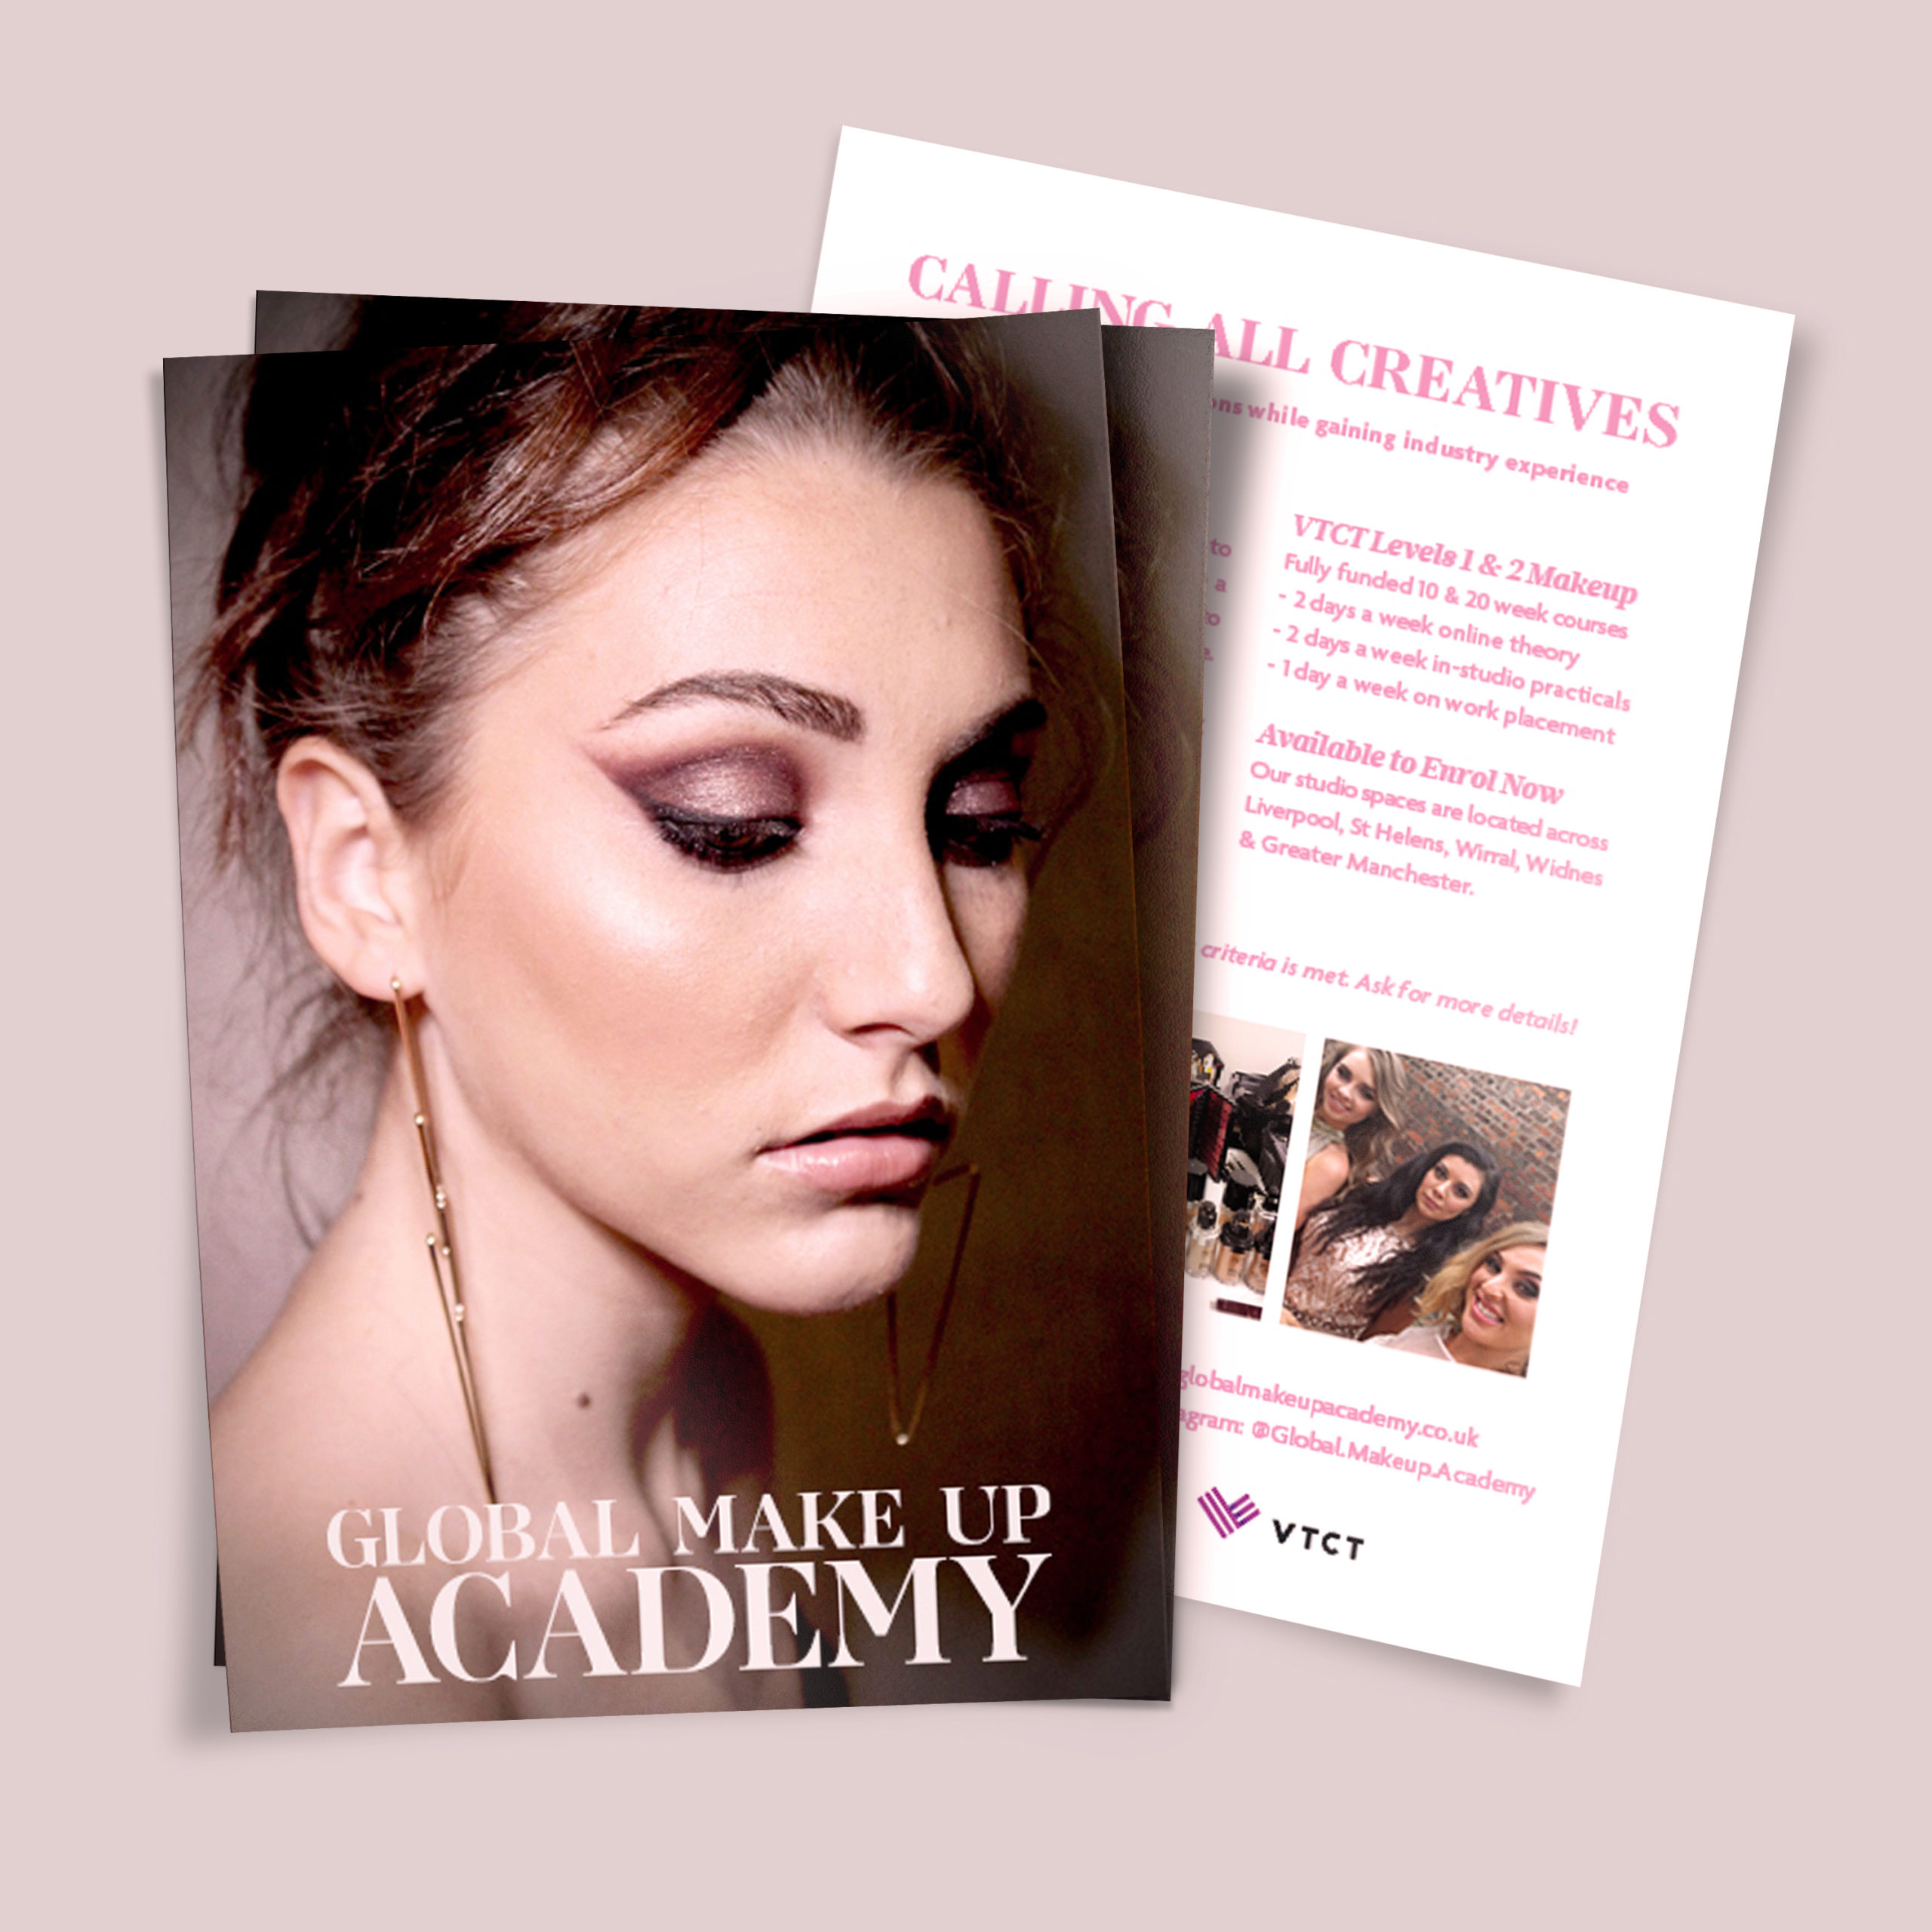 Ana Beauty – The Make-Up Artist Project